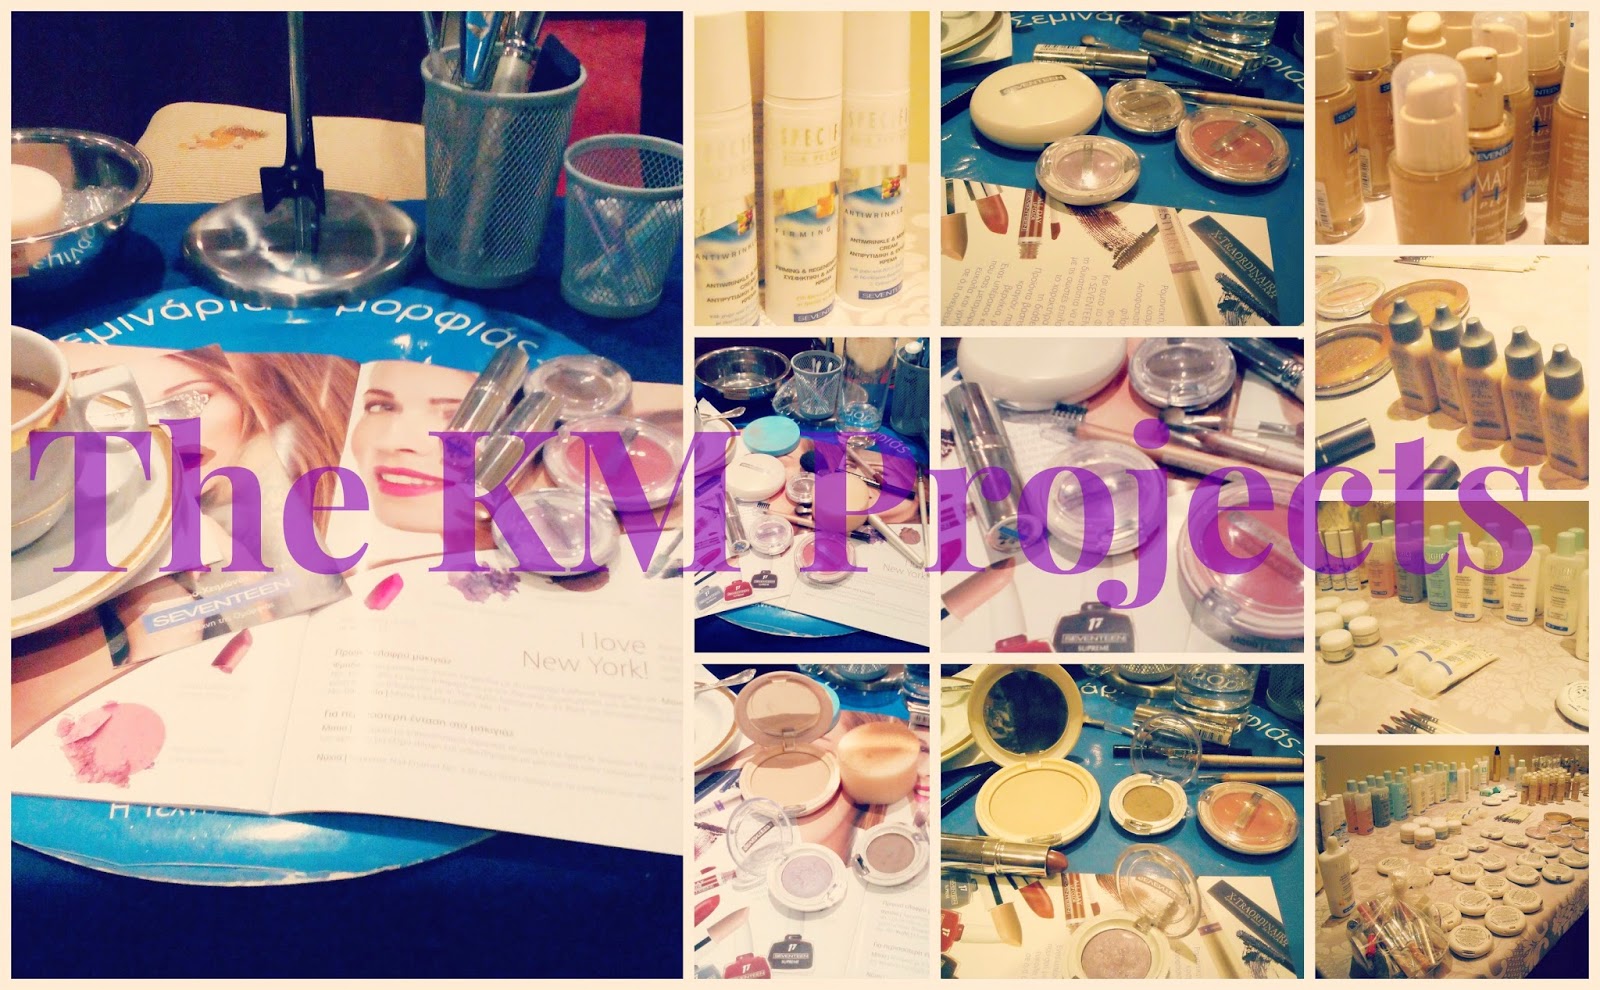 Seventeen Cosmetics makeup seminar